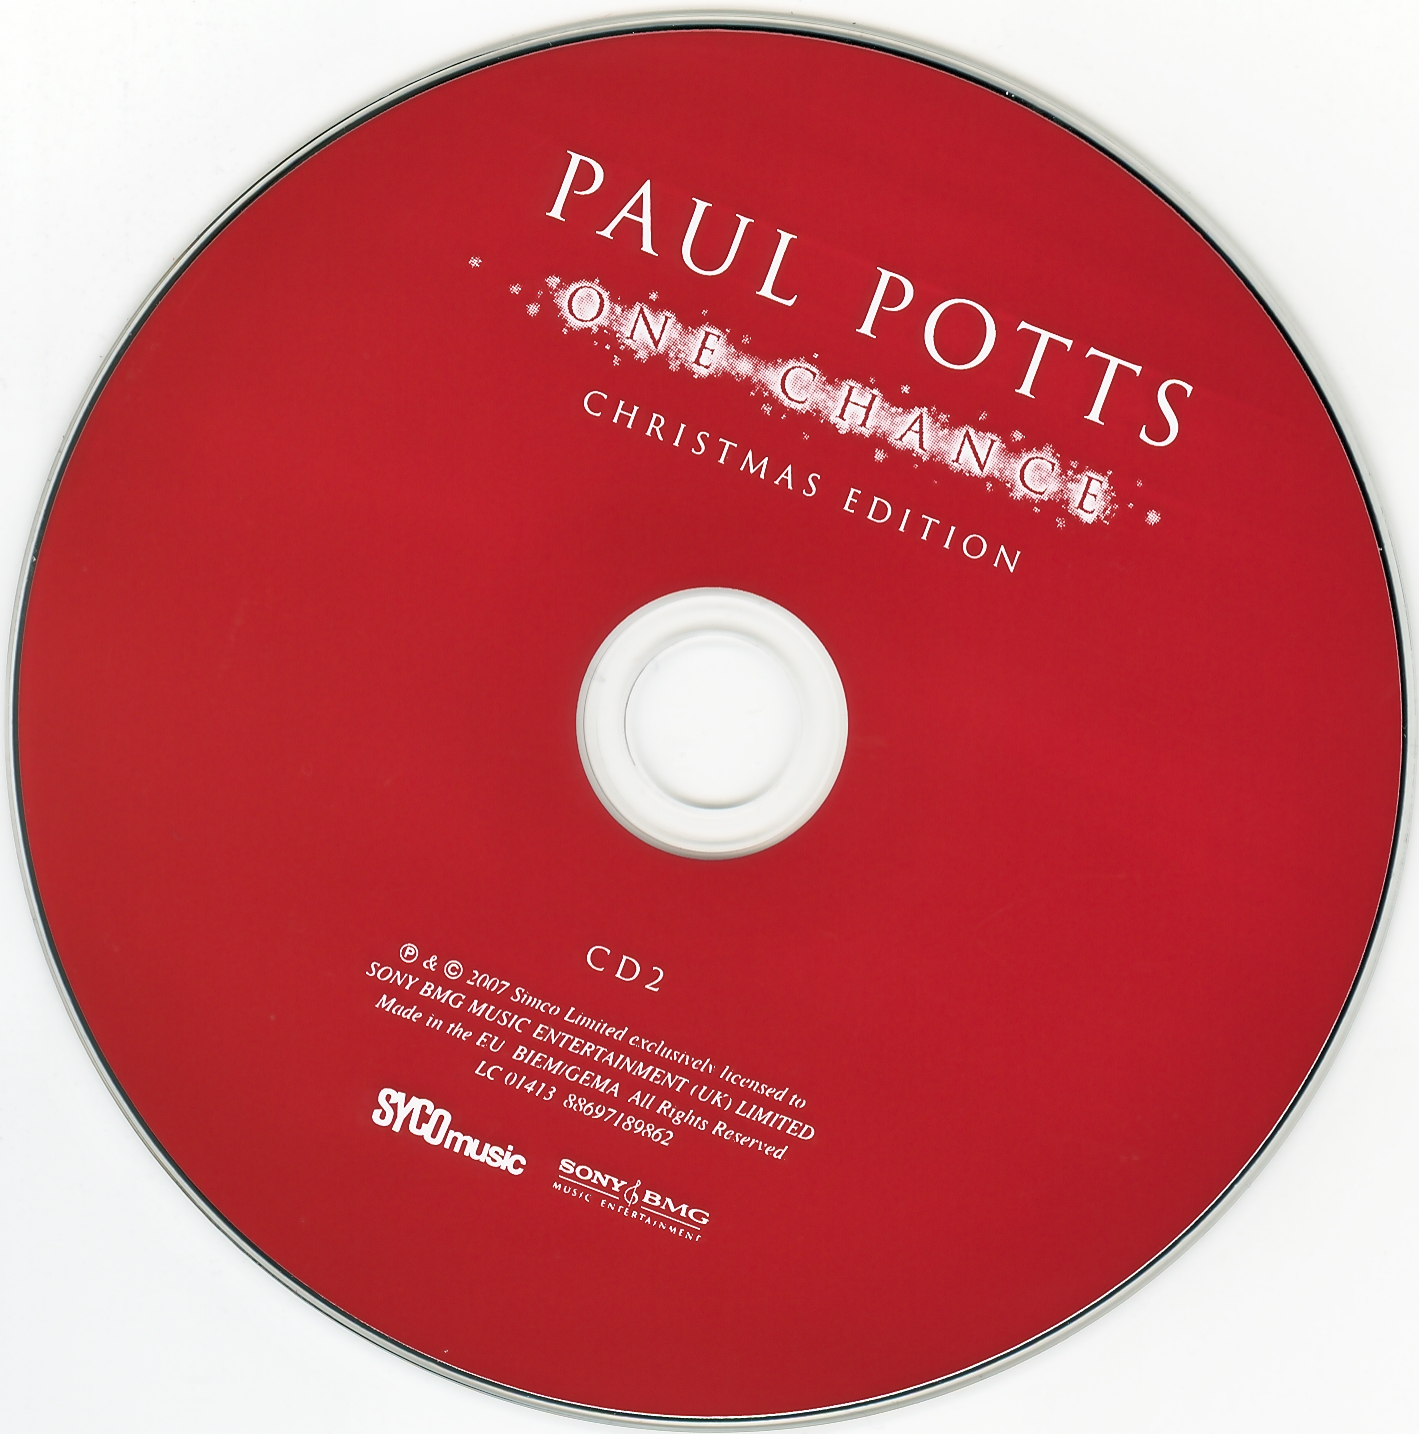 Paul Potts - One Change Christmas Edition - Disc 2